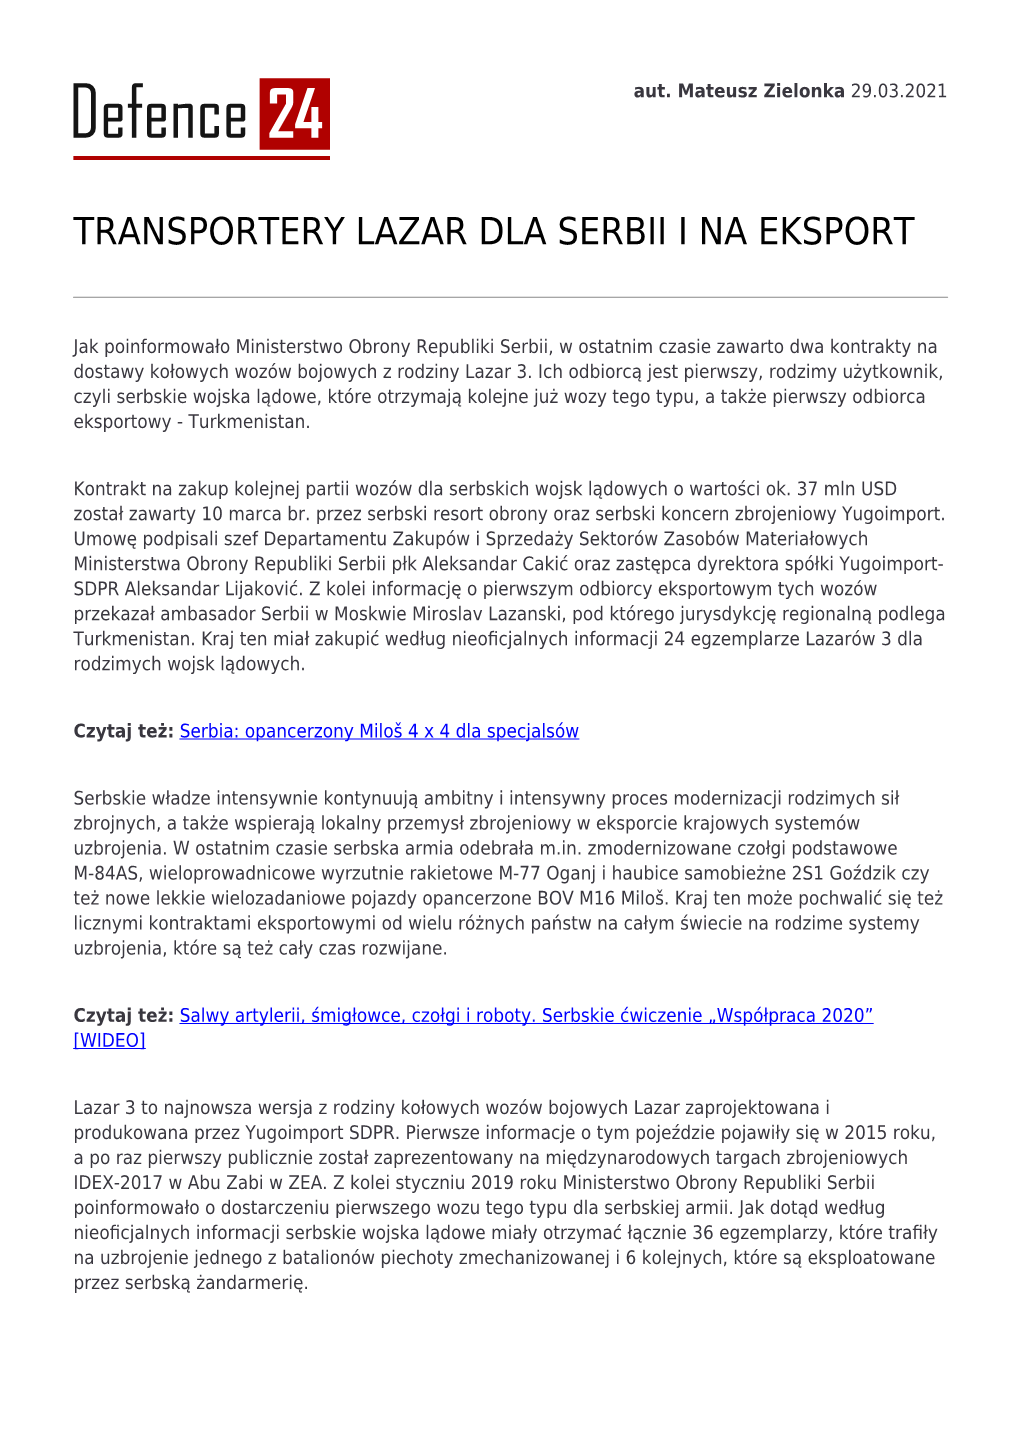 Transportery Lazar Dla Serbii I Na Eksport